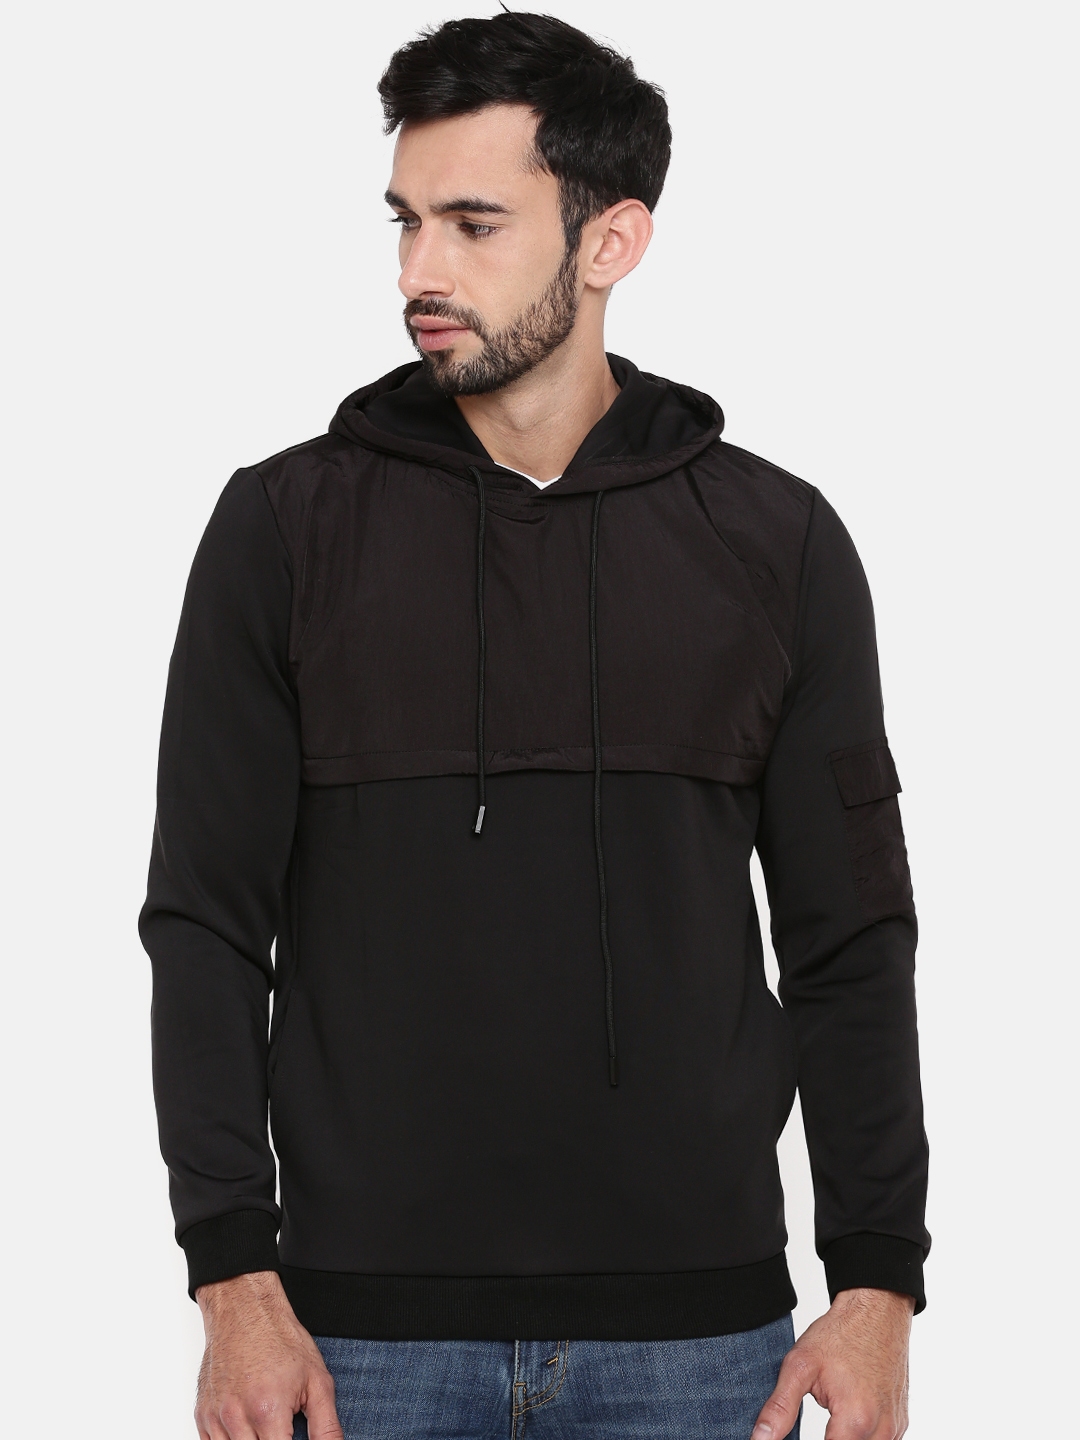 Buy The Indian Garage Co Men Black Solid Hooded Sweatshirt ...